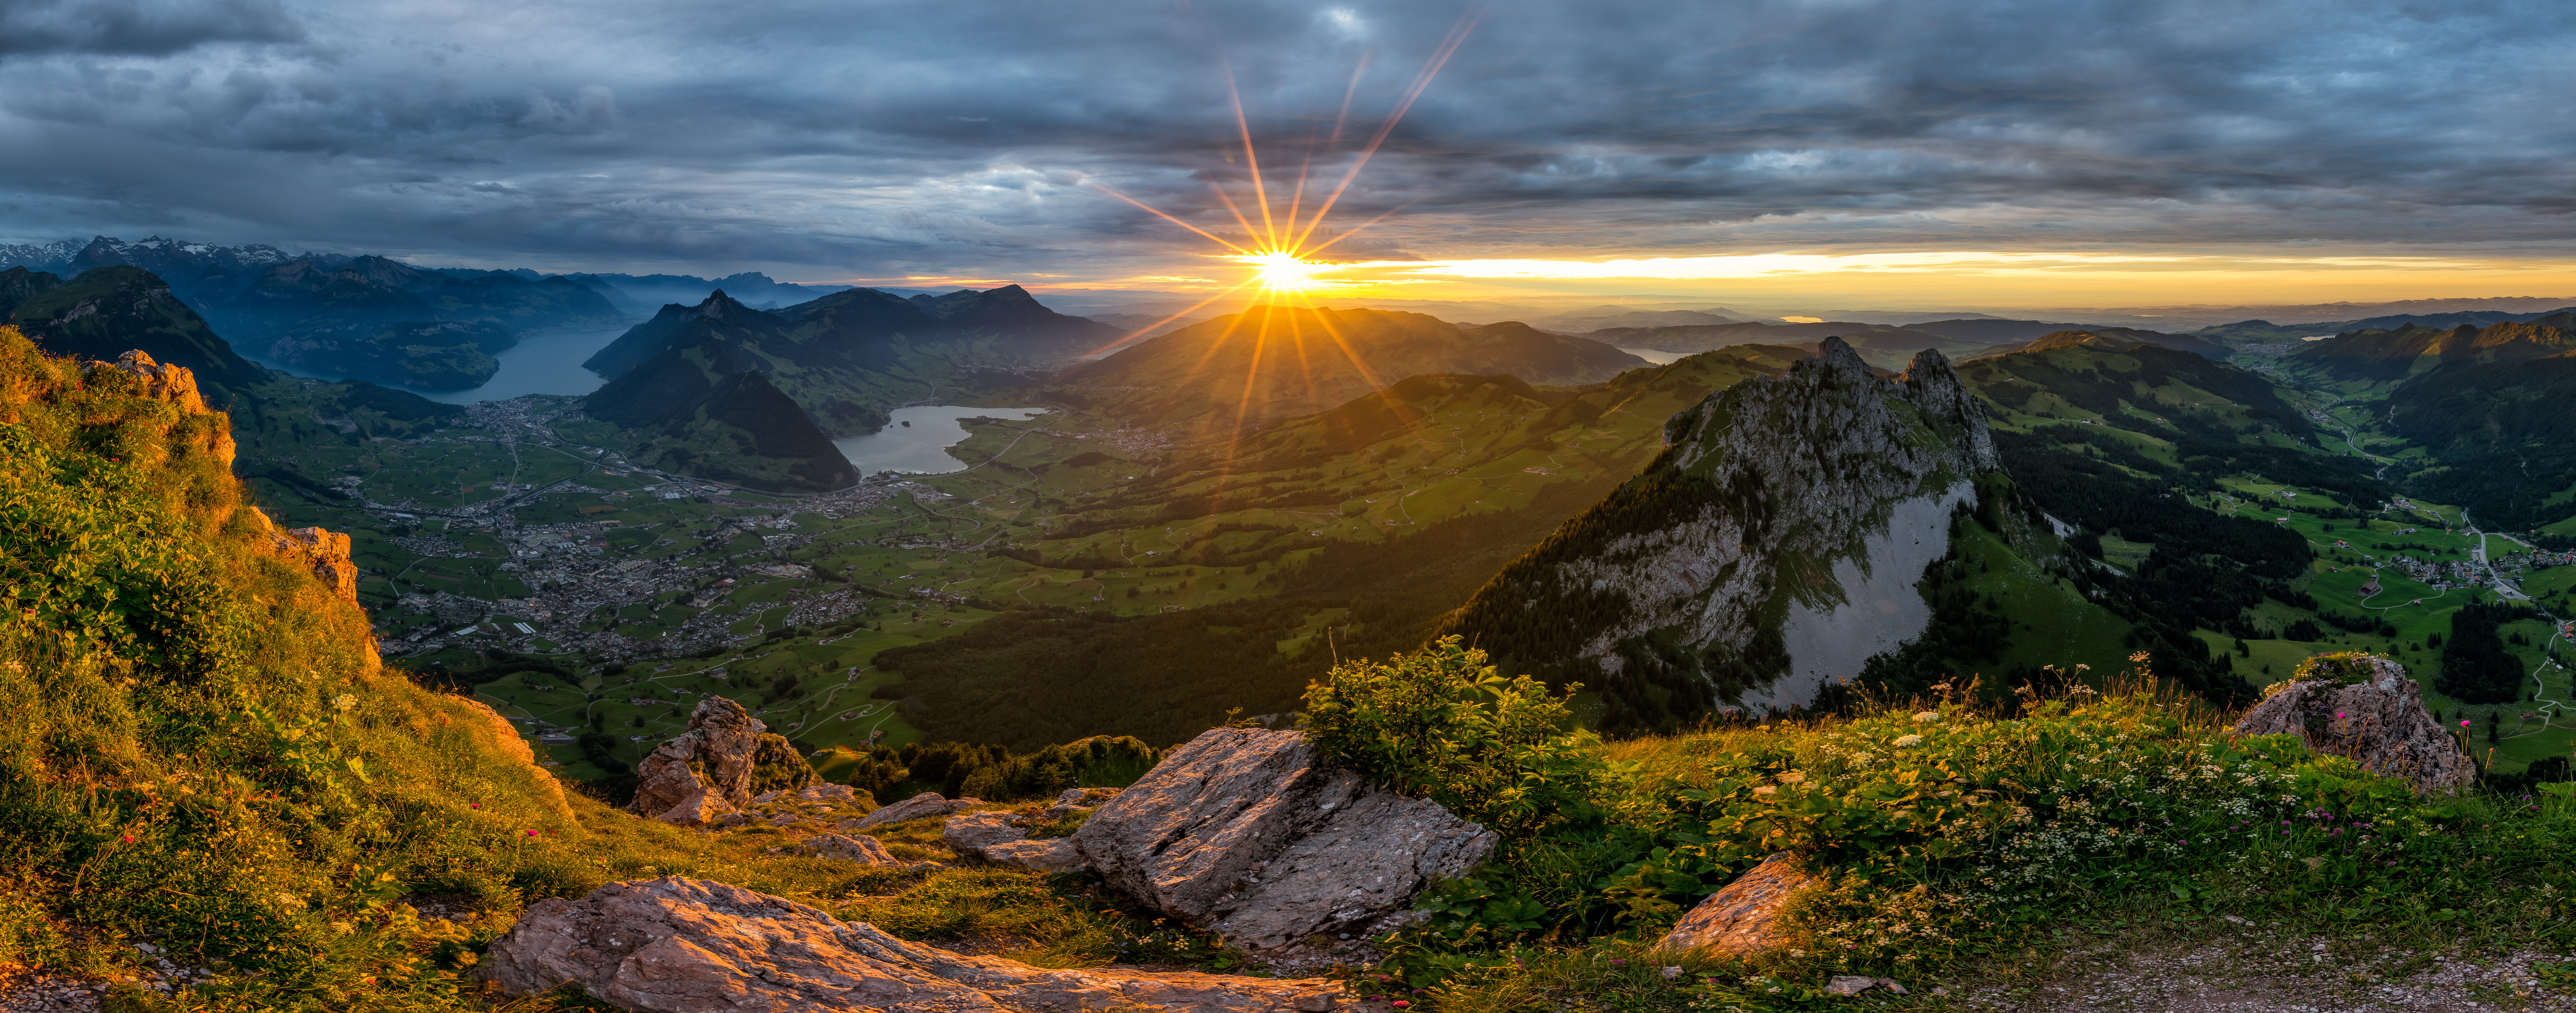 General 6143x2416 nature landscape sunrise sunset mountains Alps Swiss Alps Switzerland